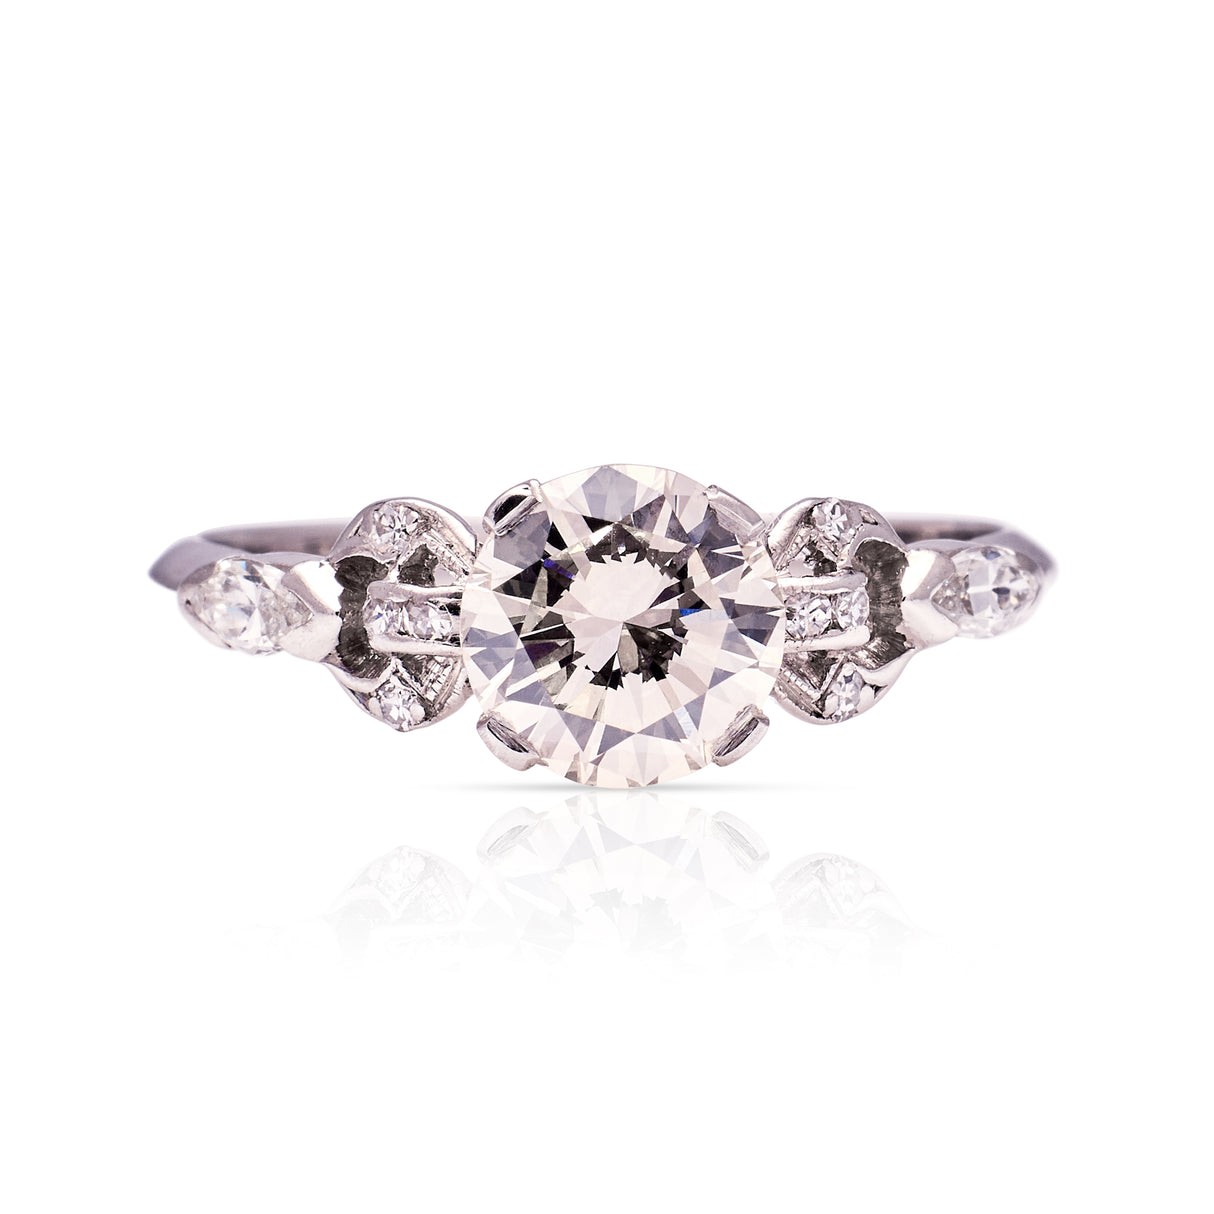 Vintage, 1950s diamond engagement ring, 14ct white gold & platinum